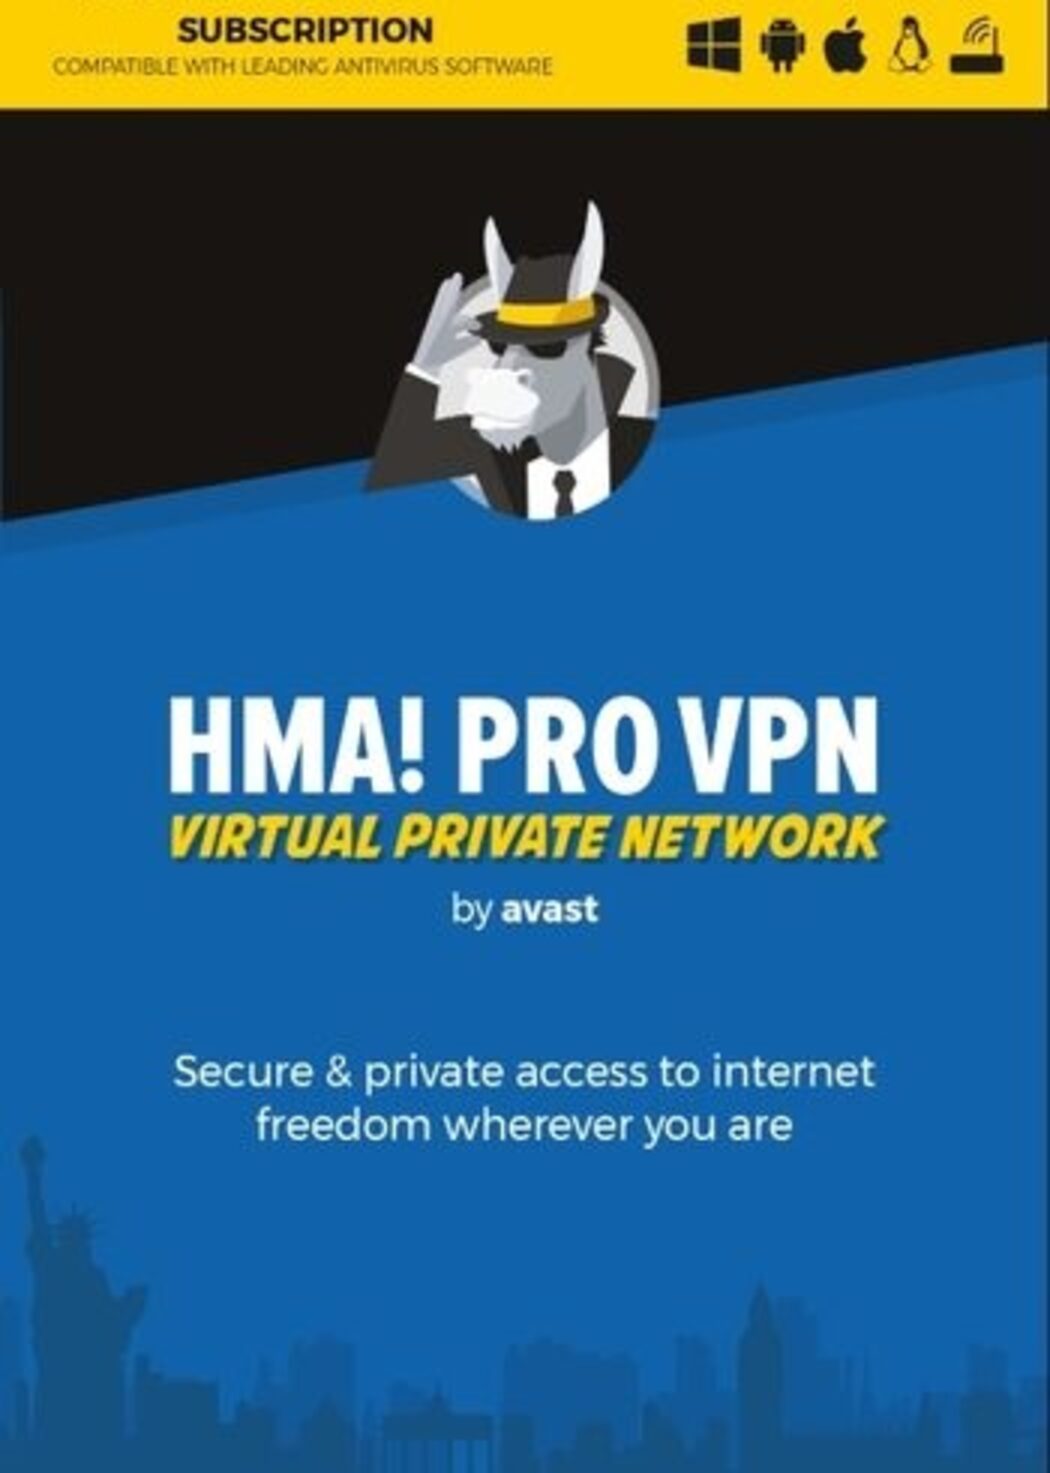 hma pro vpn free account